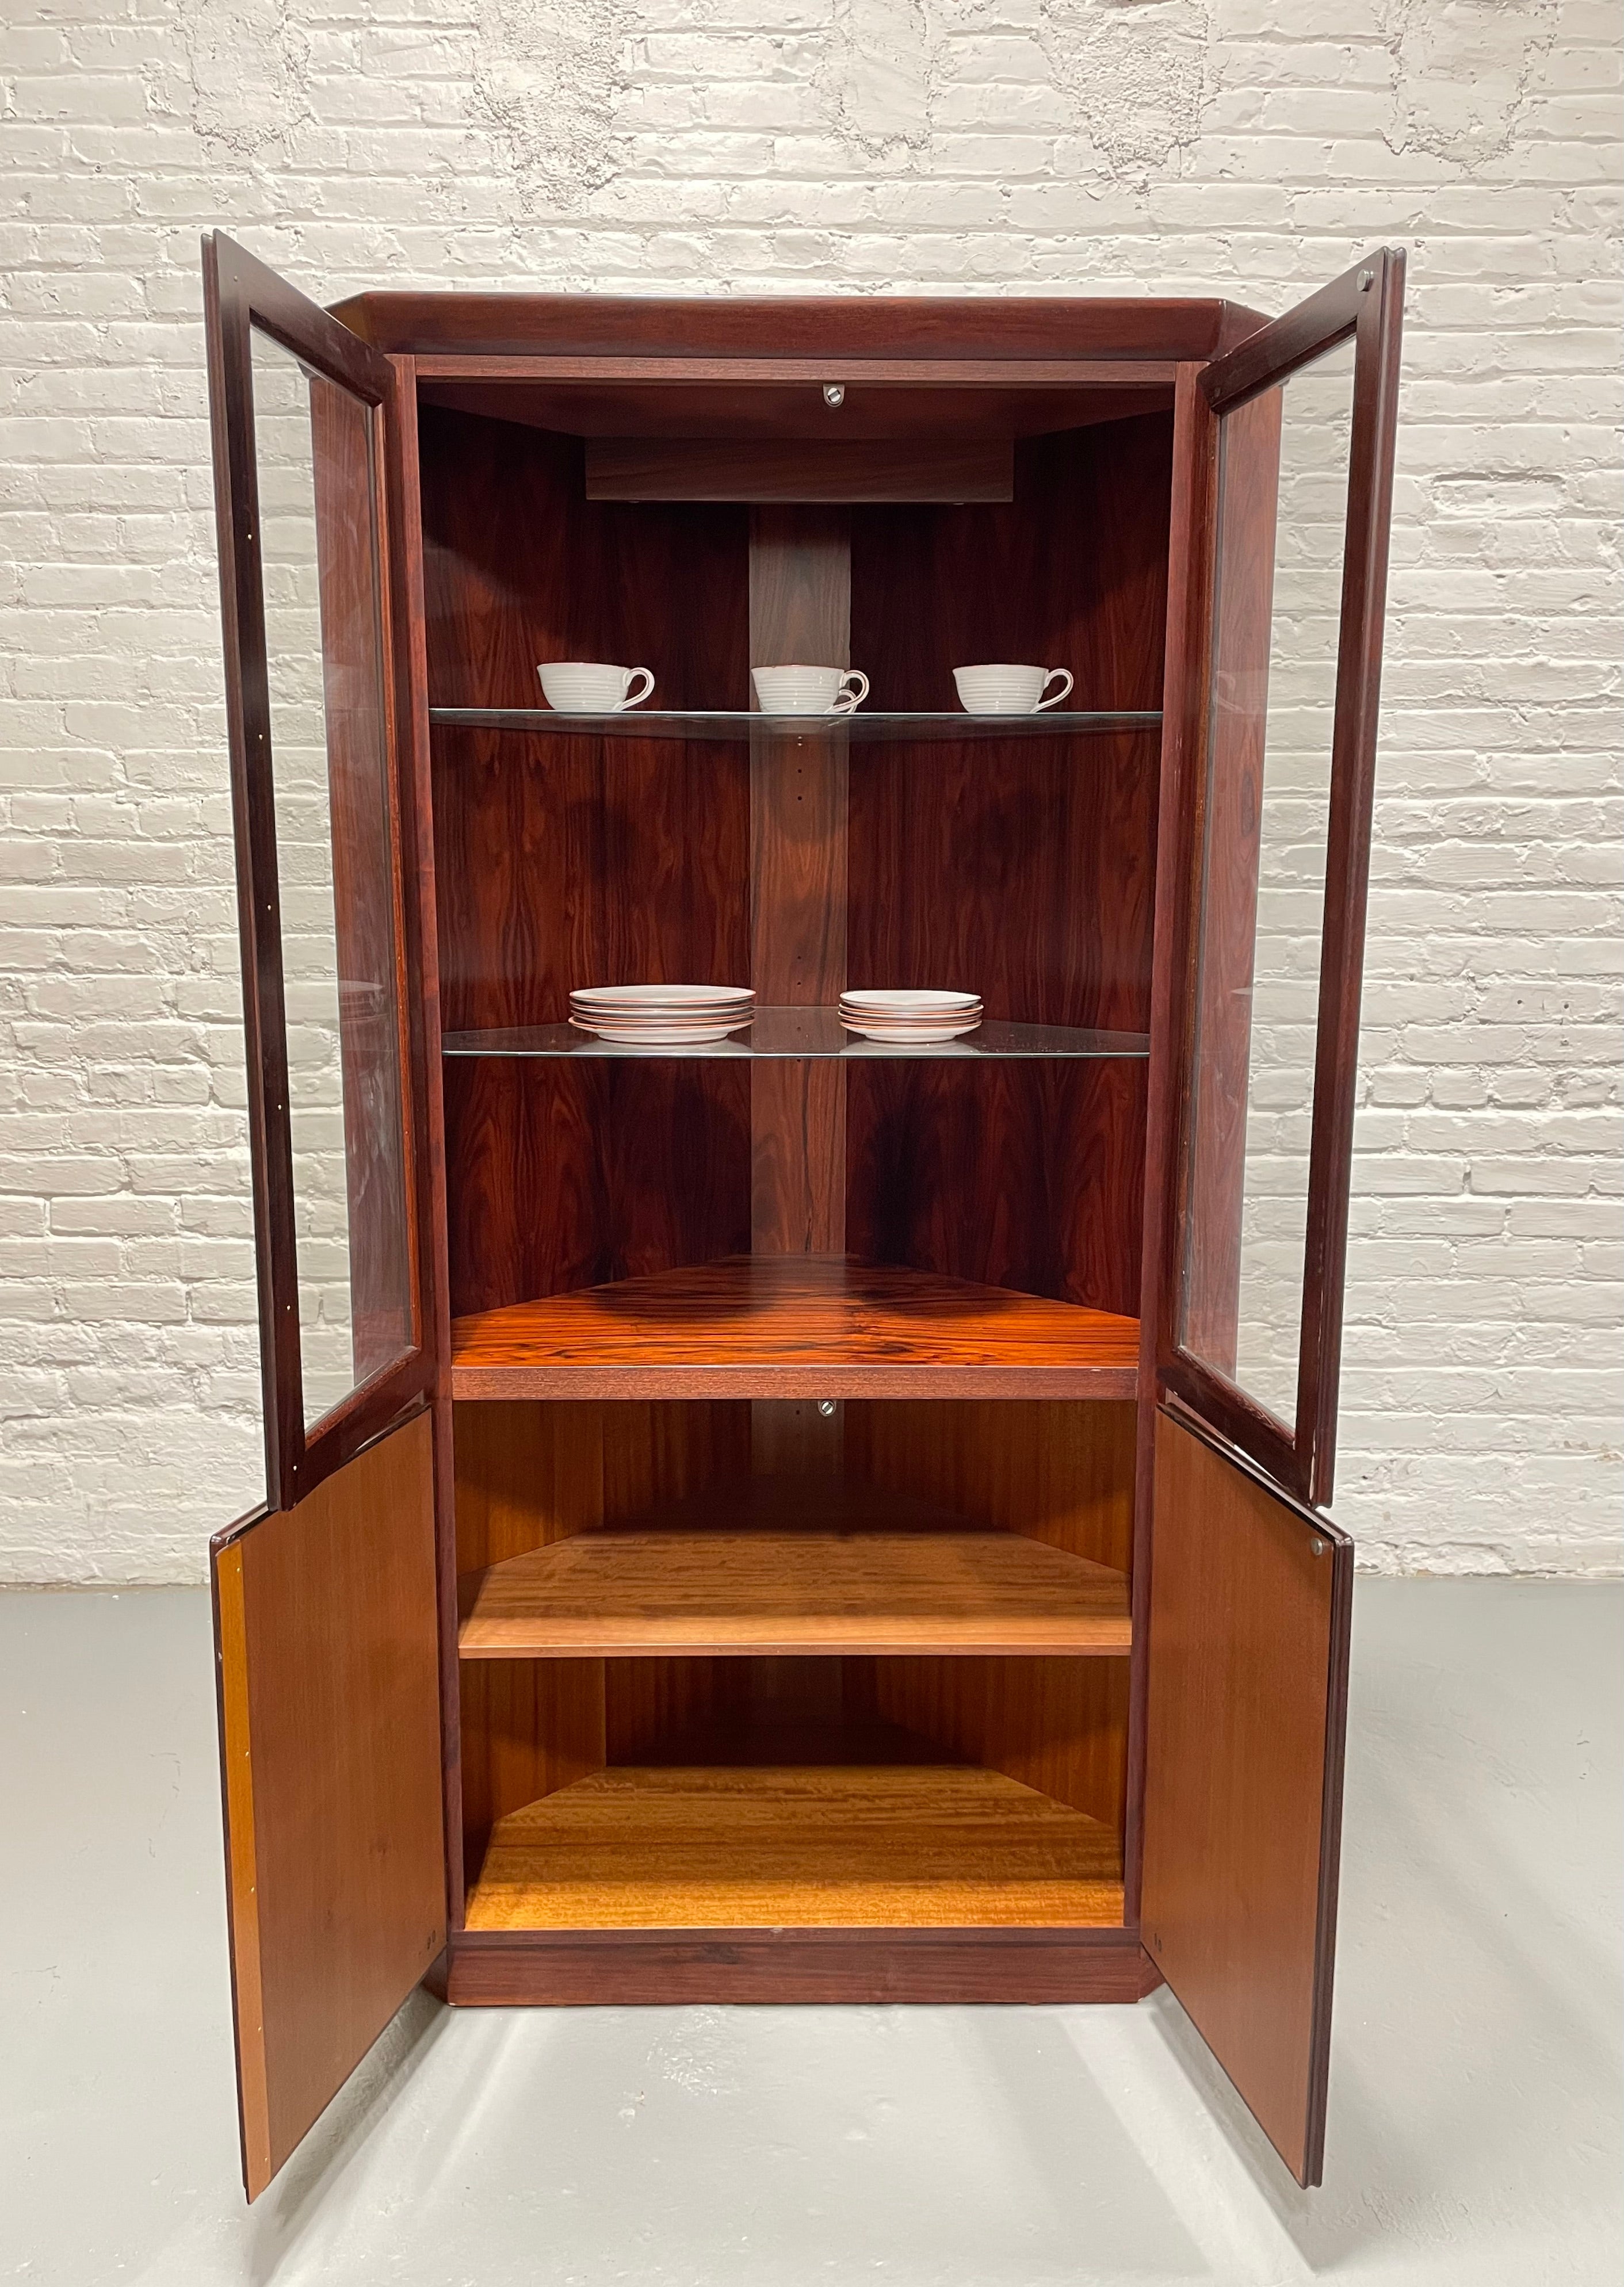 DANISH Mid Century Modern TEAK CORNER Bookcase / China Cabinet by Skovby, Made in Denmark